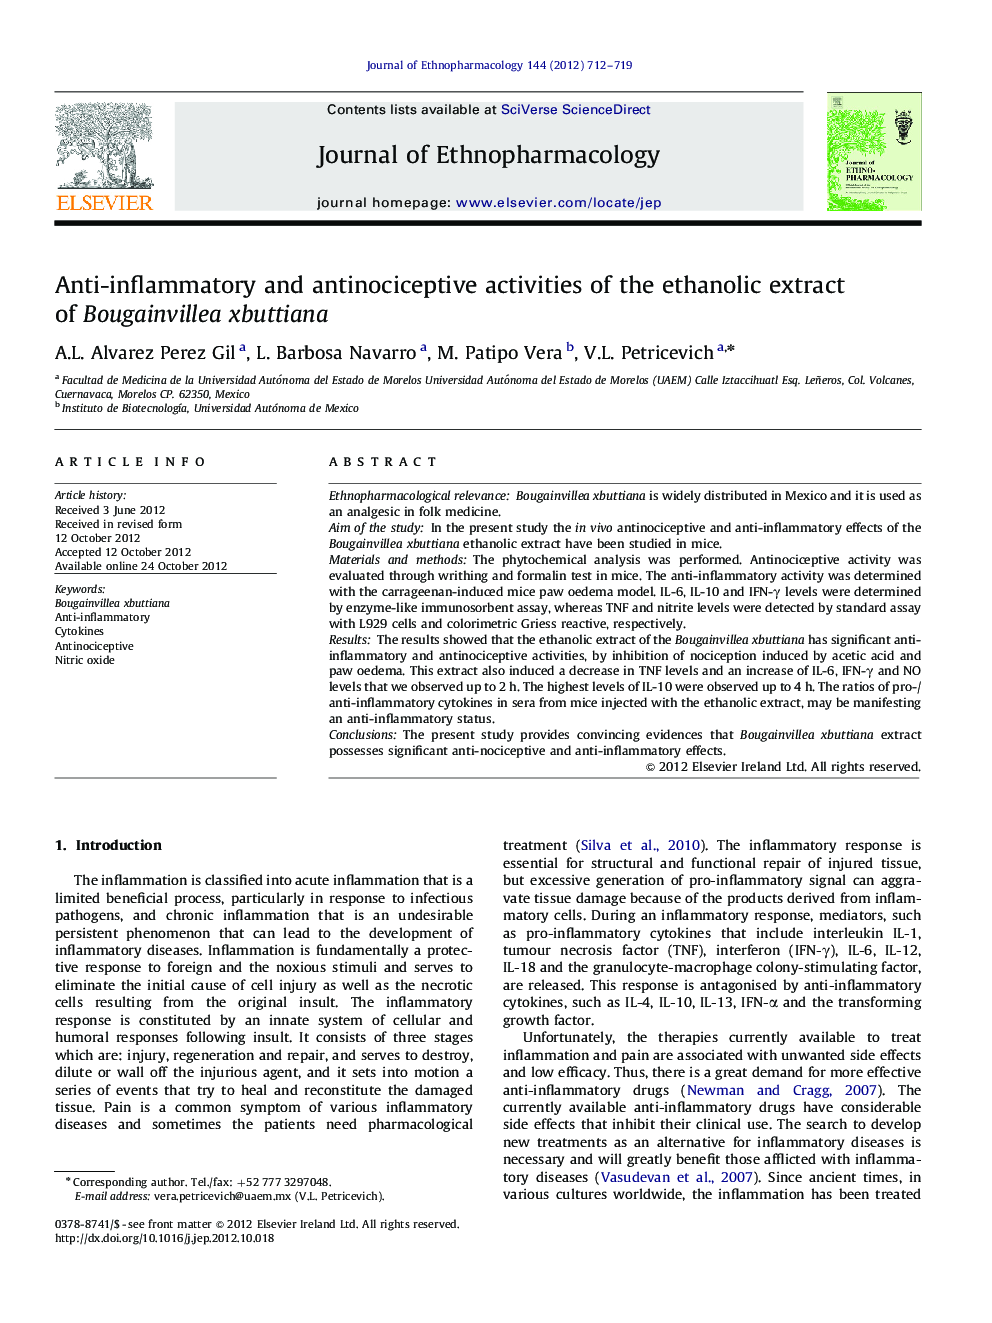 Anti-inflammatory and antinociceptive activities of the ethanolic extract of Bougainvillea xbuttiana